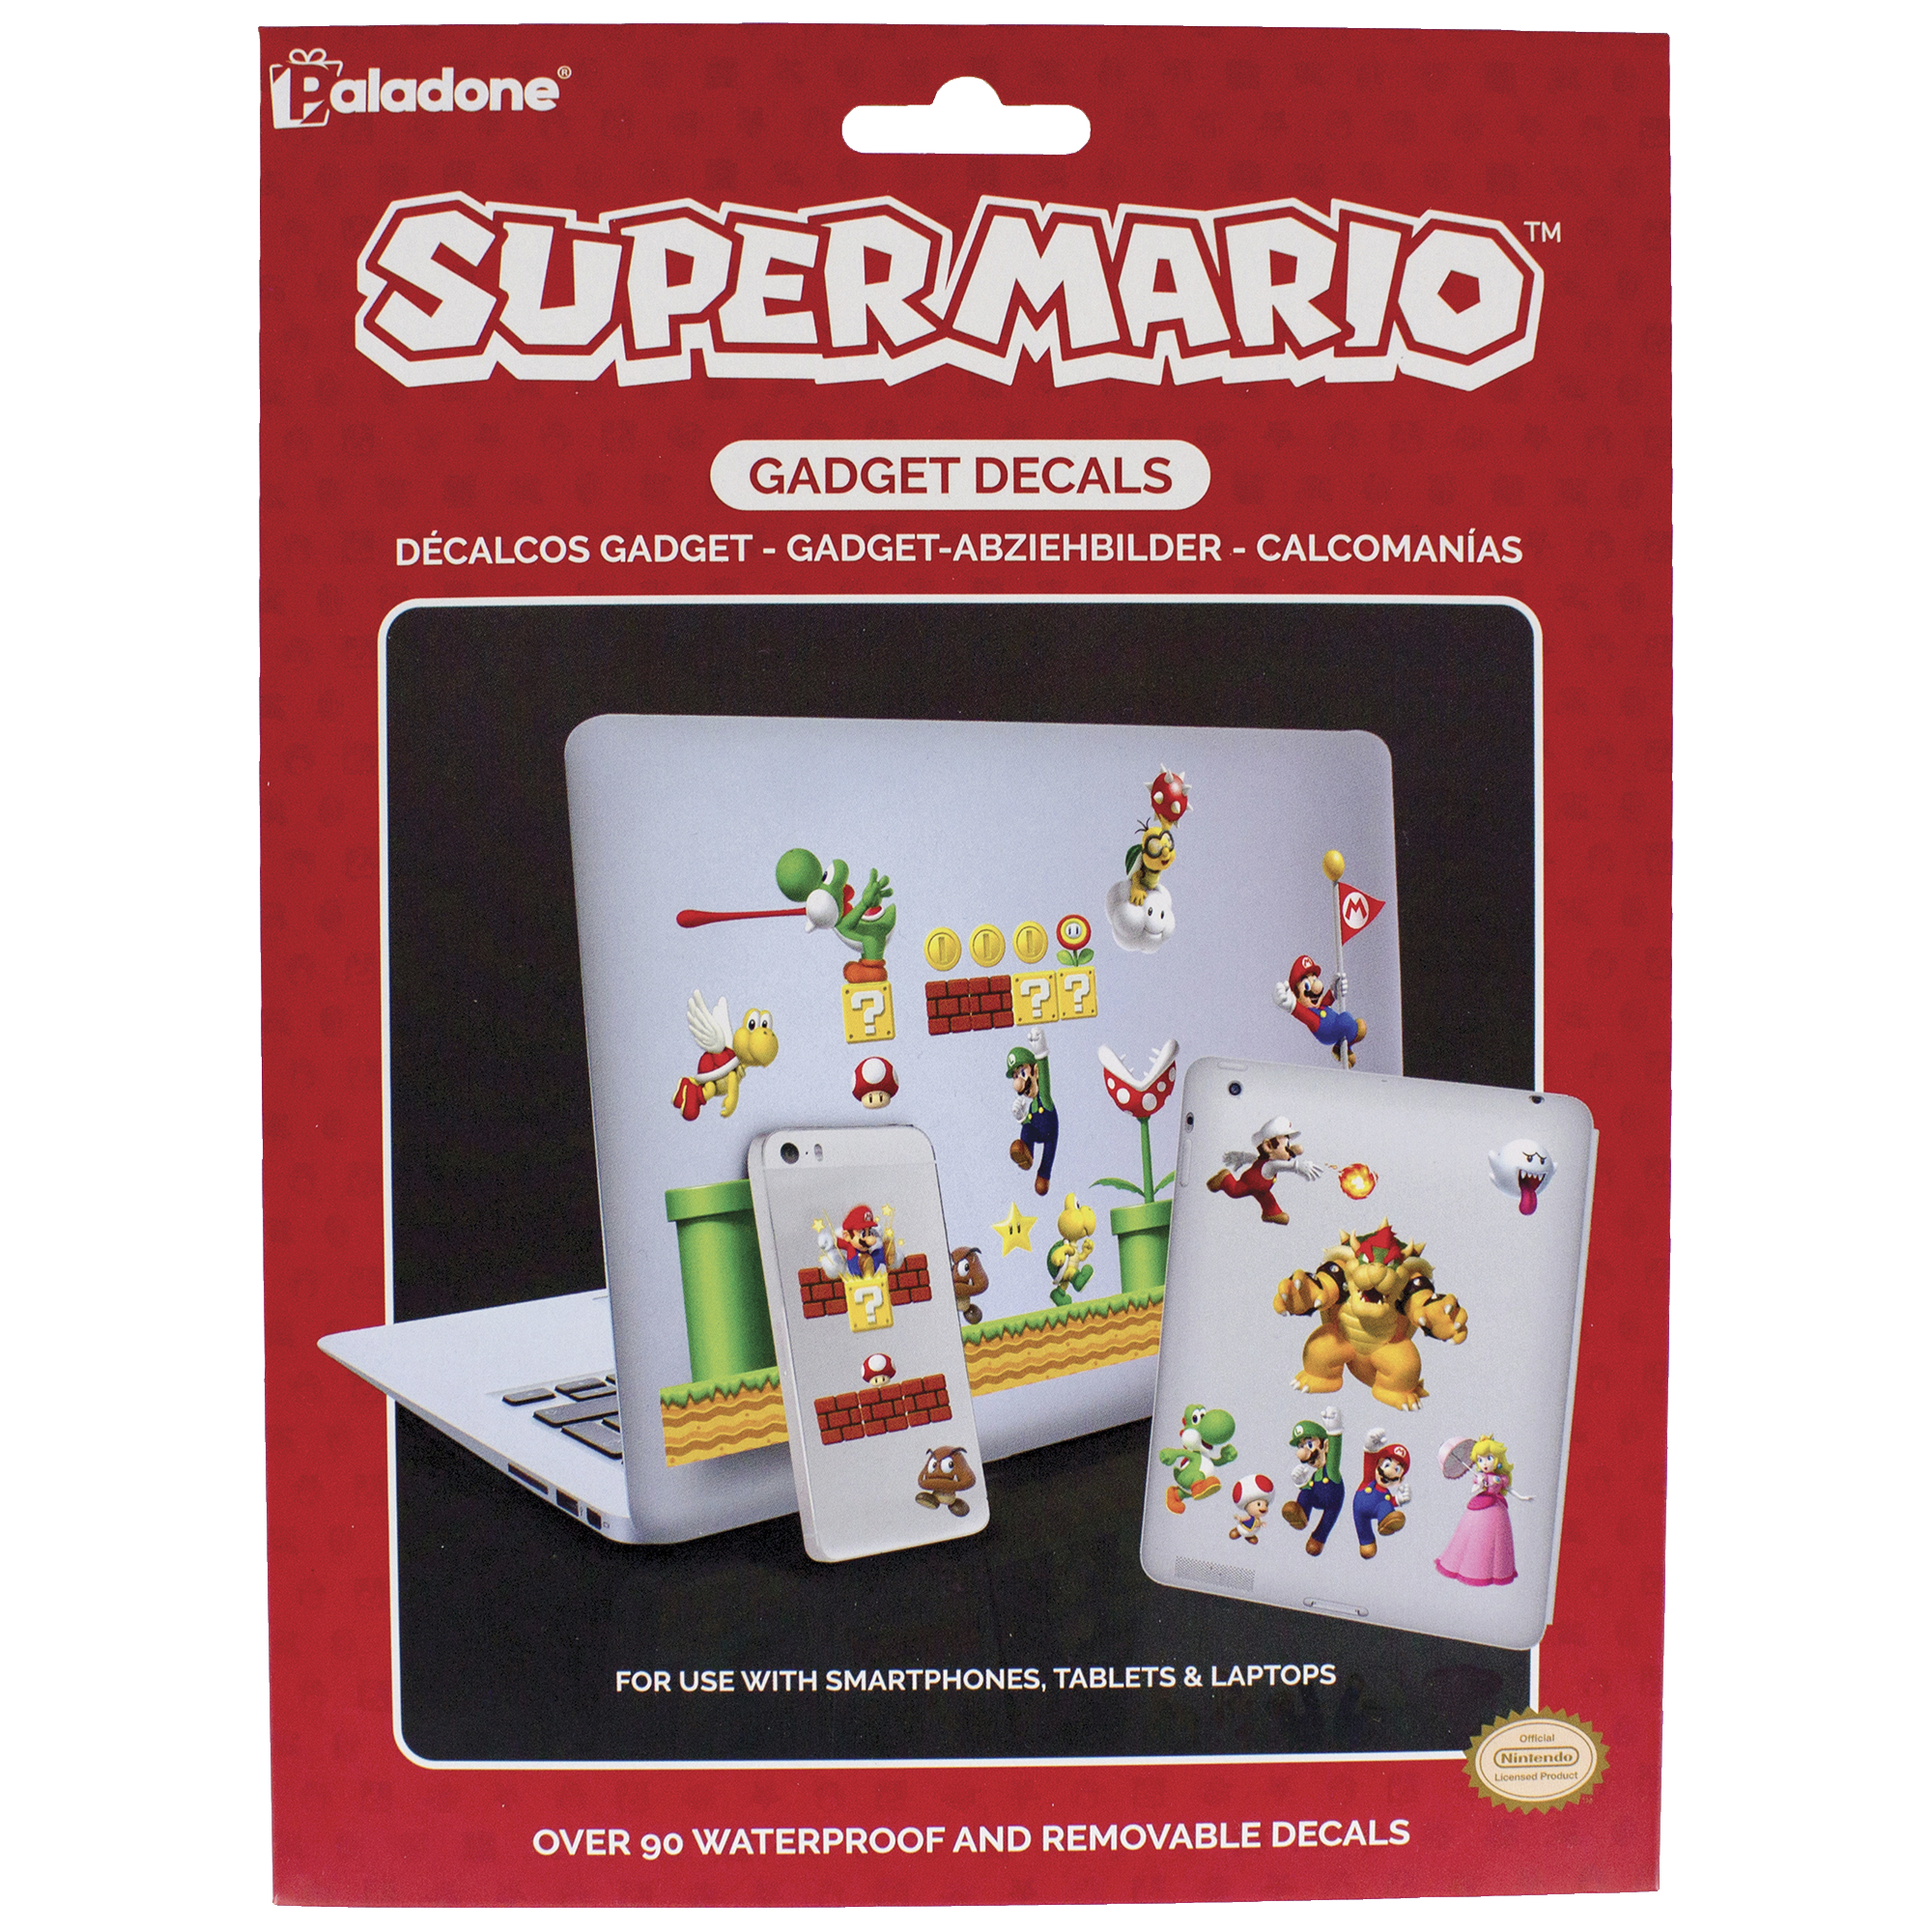 Paladone Super Mario gadget dekaler - Gaming och Esport ...